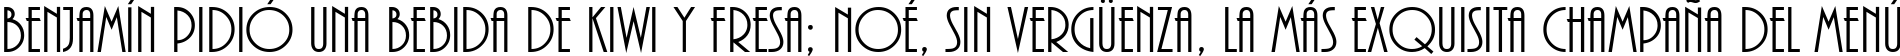 Пример написания шрифтом BONNIE Regular текста на испанском